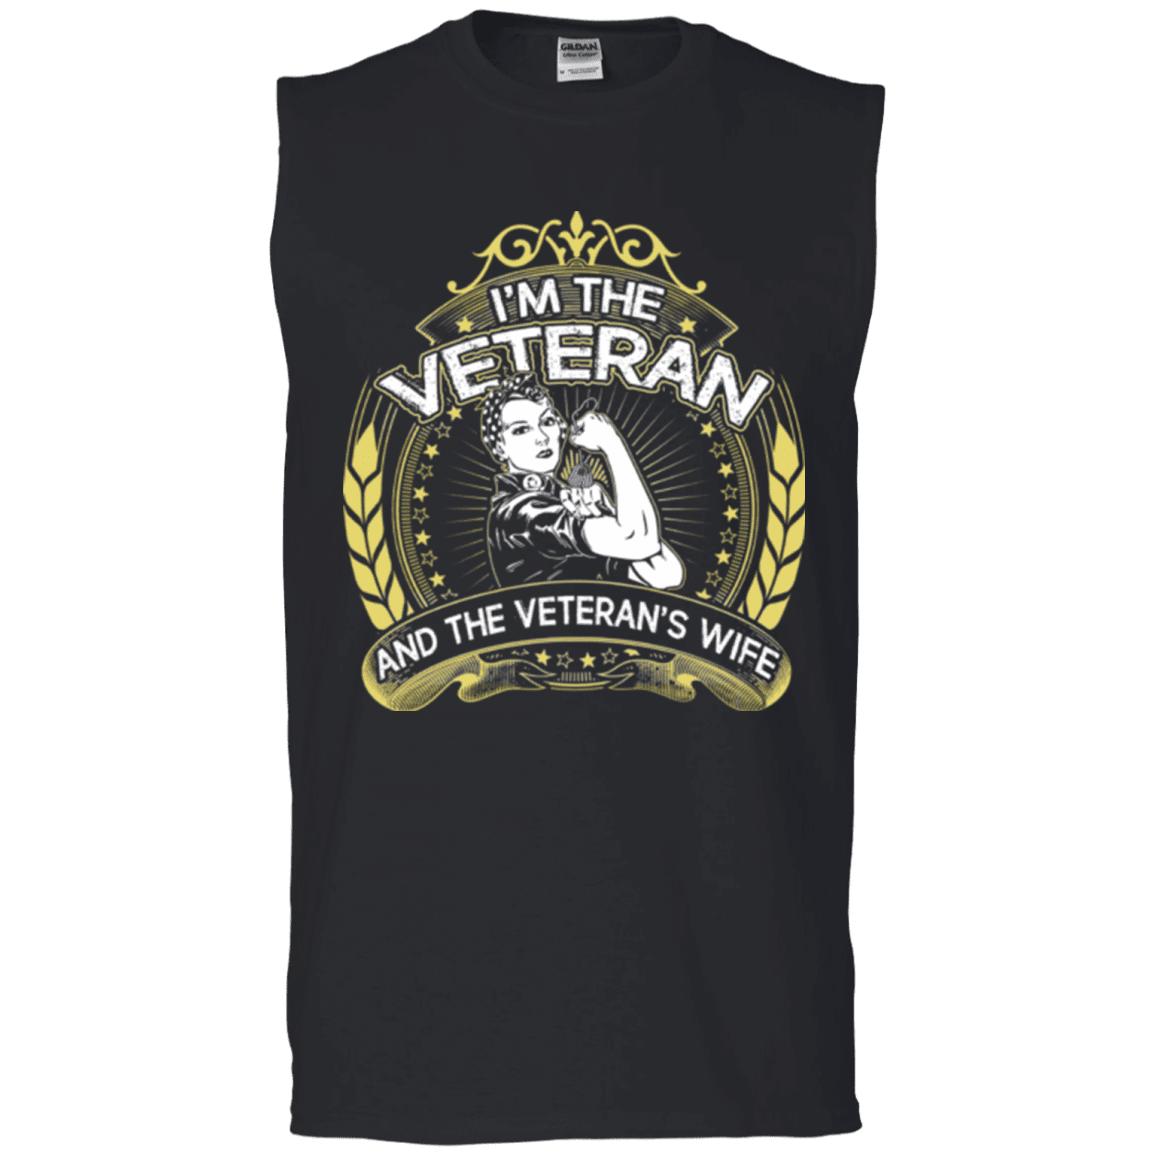 Military T-Shirt "I AM THE VETERAN AND THE VETERAN'S WIFE"-TShirt-General-Veterans Nation